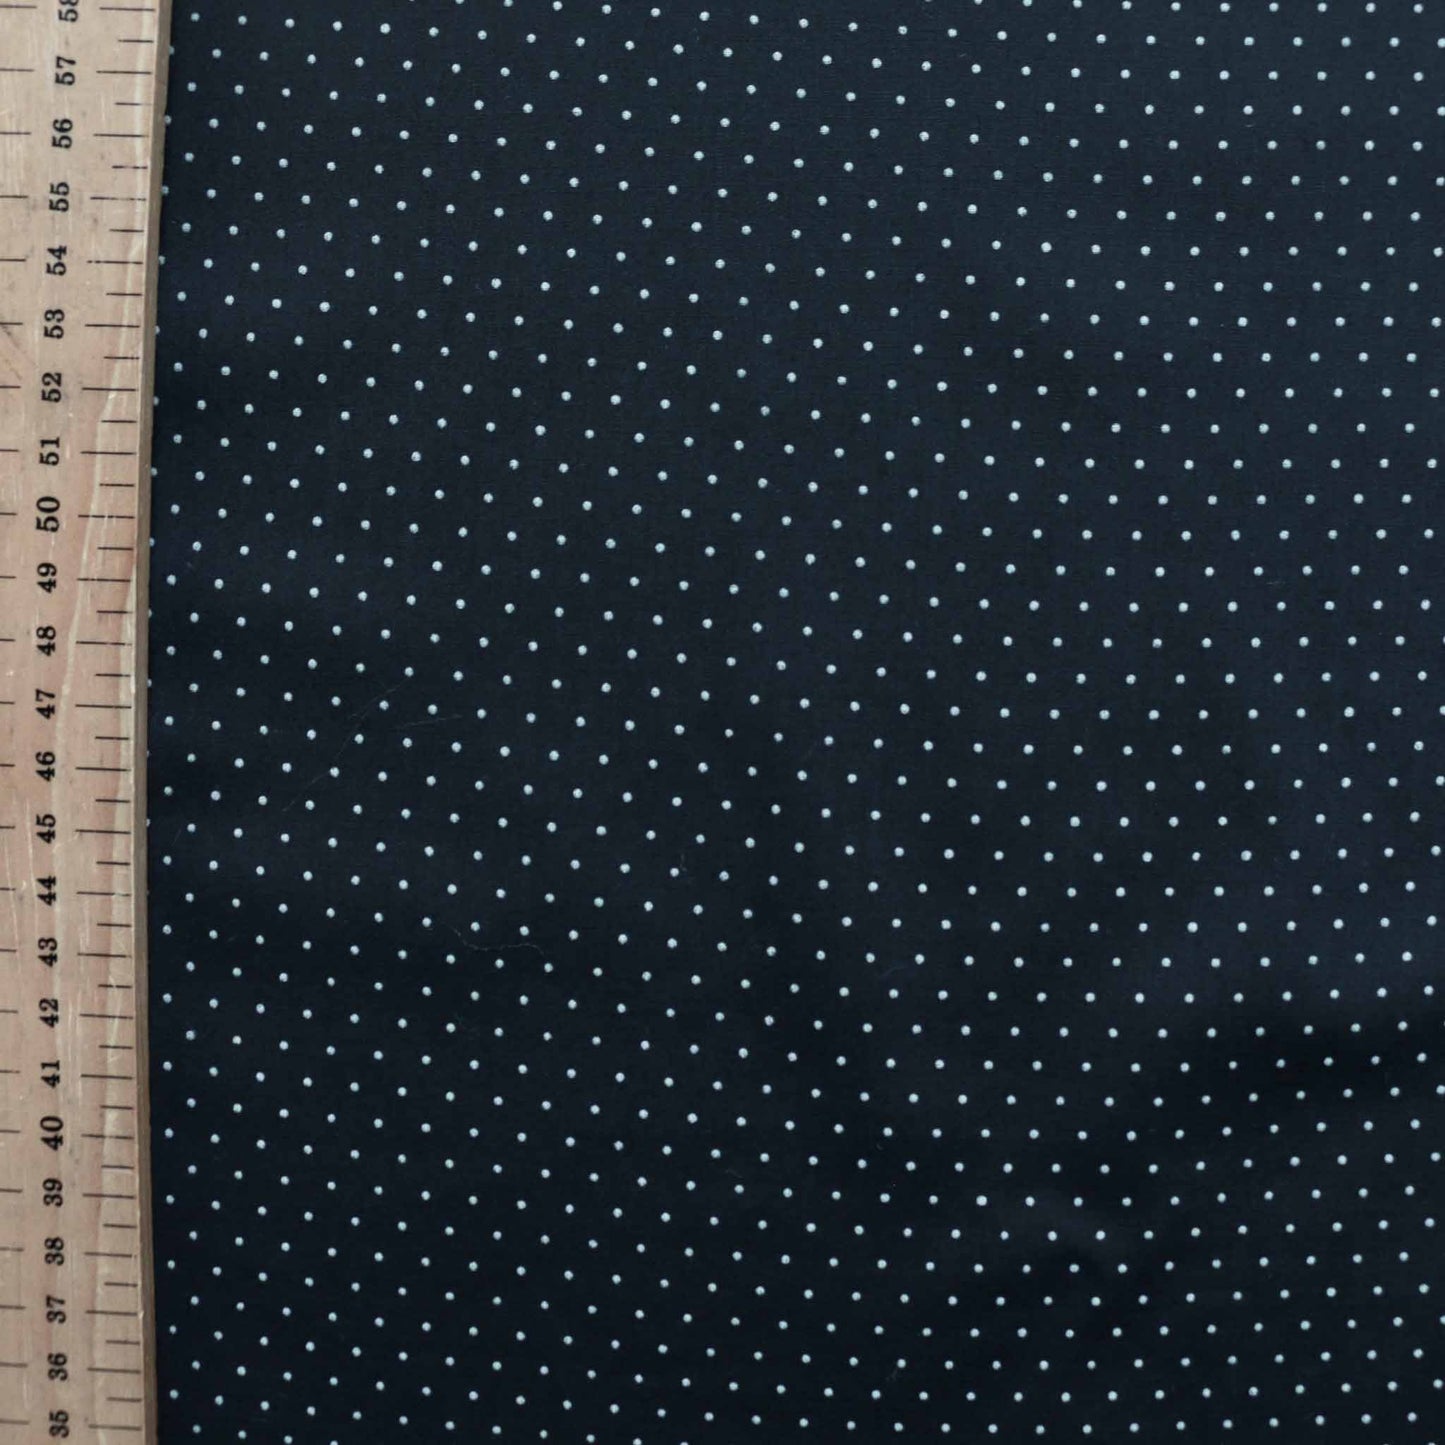 metre white polka dots on black polycotton dressmaking fabric 